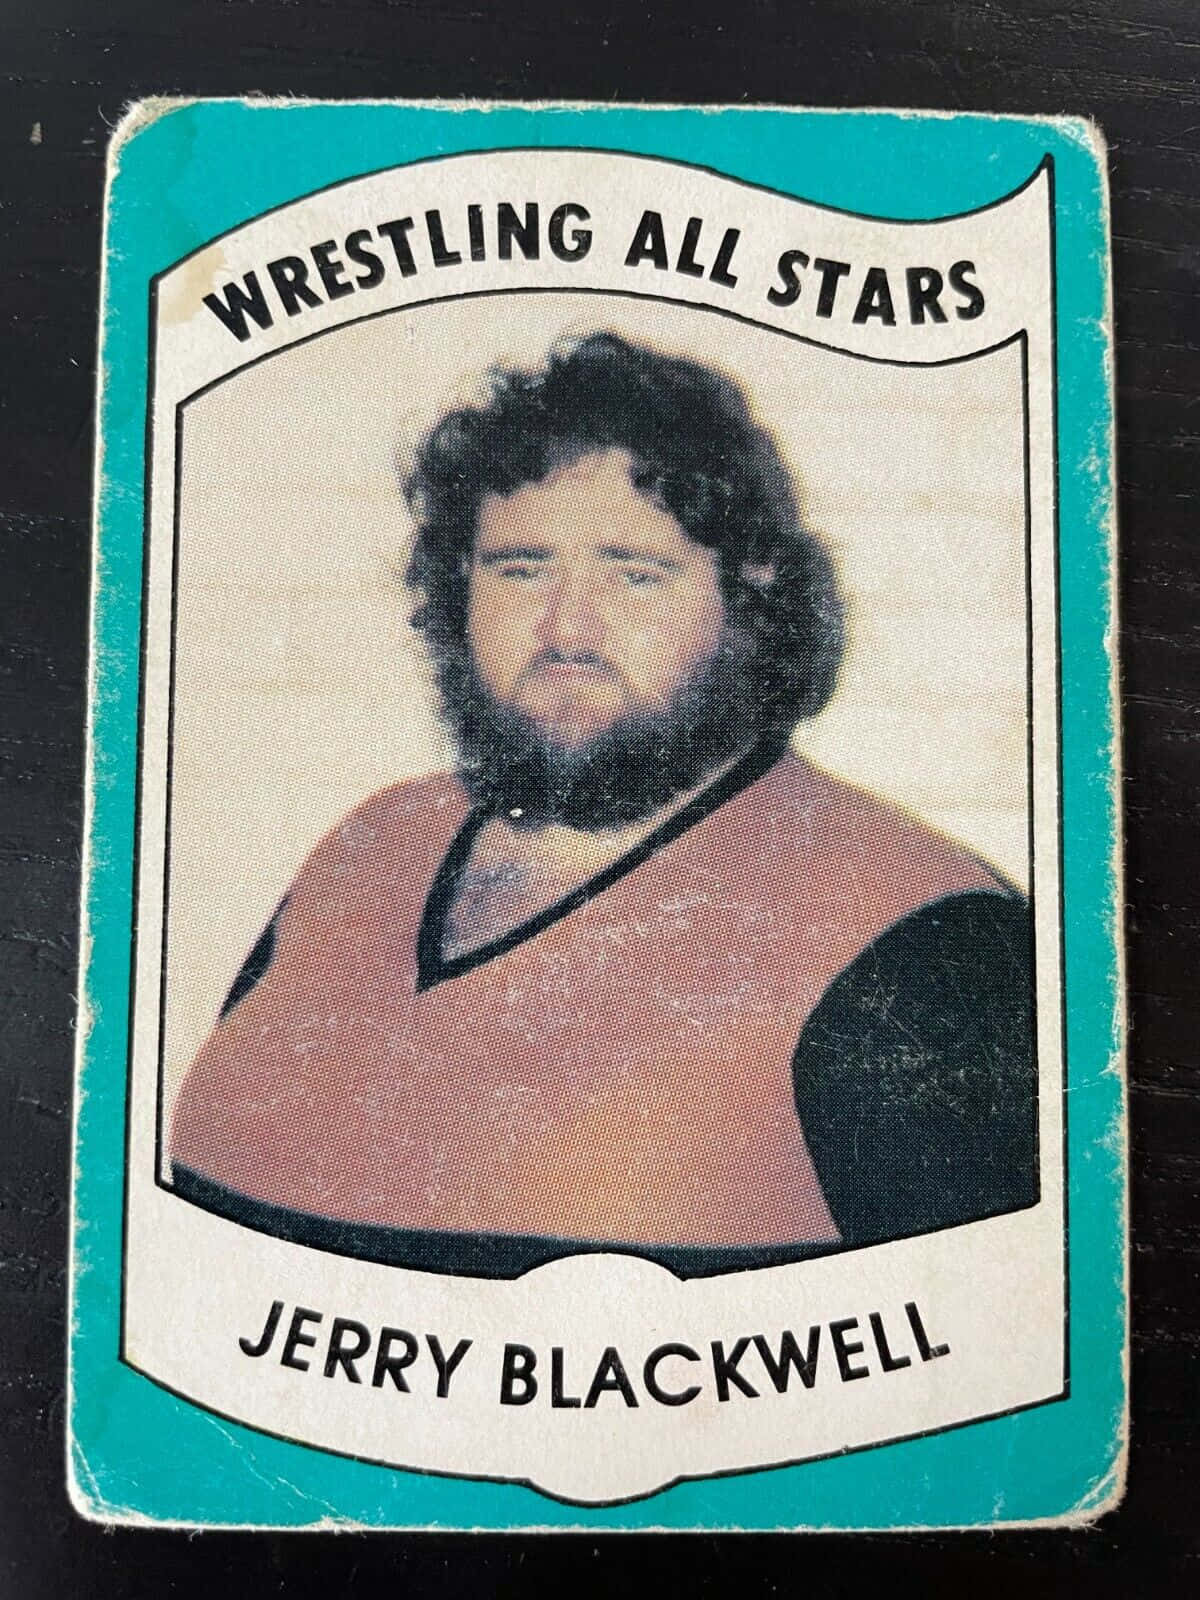 Jerry Blackwell 1200 X 1600 Wallpaper